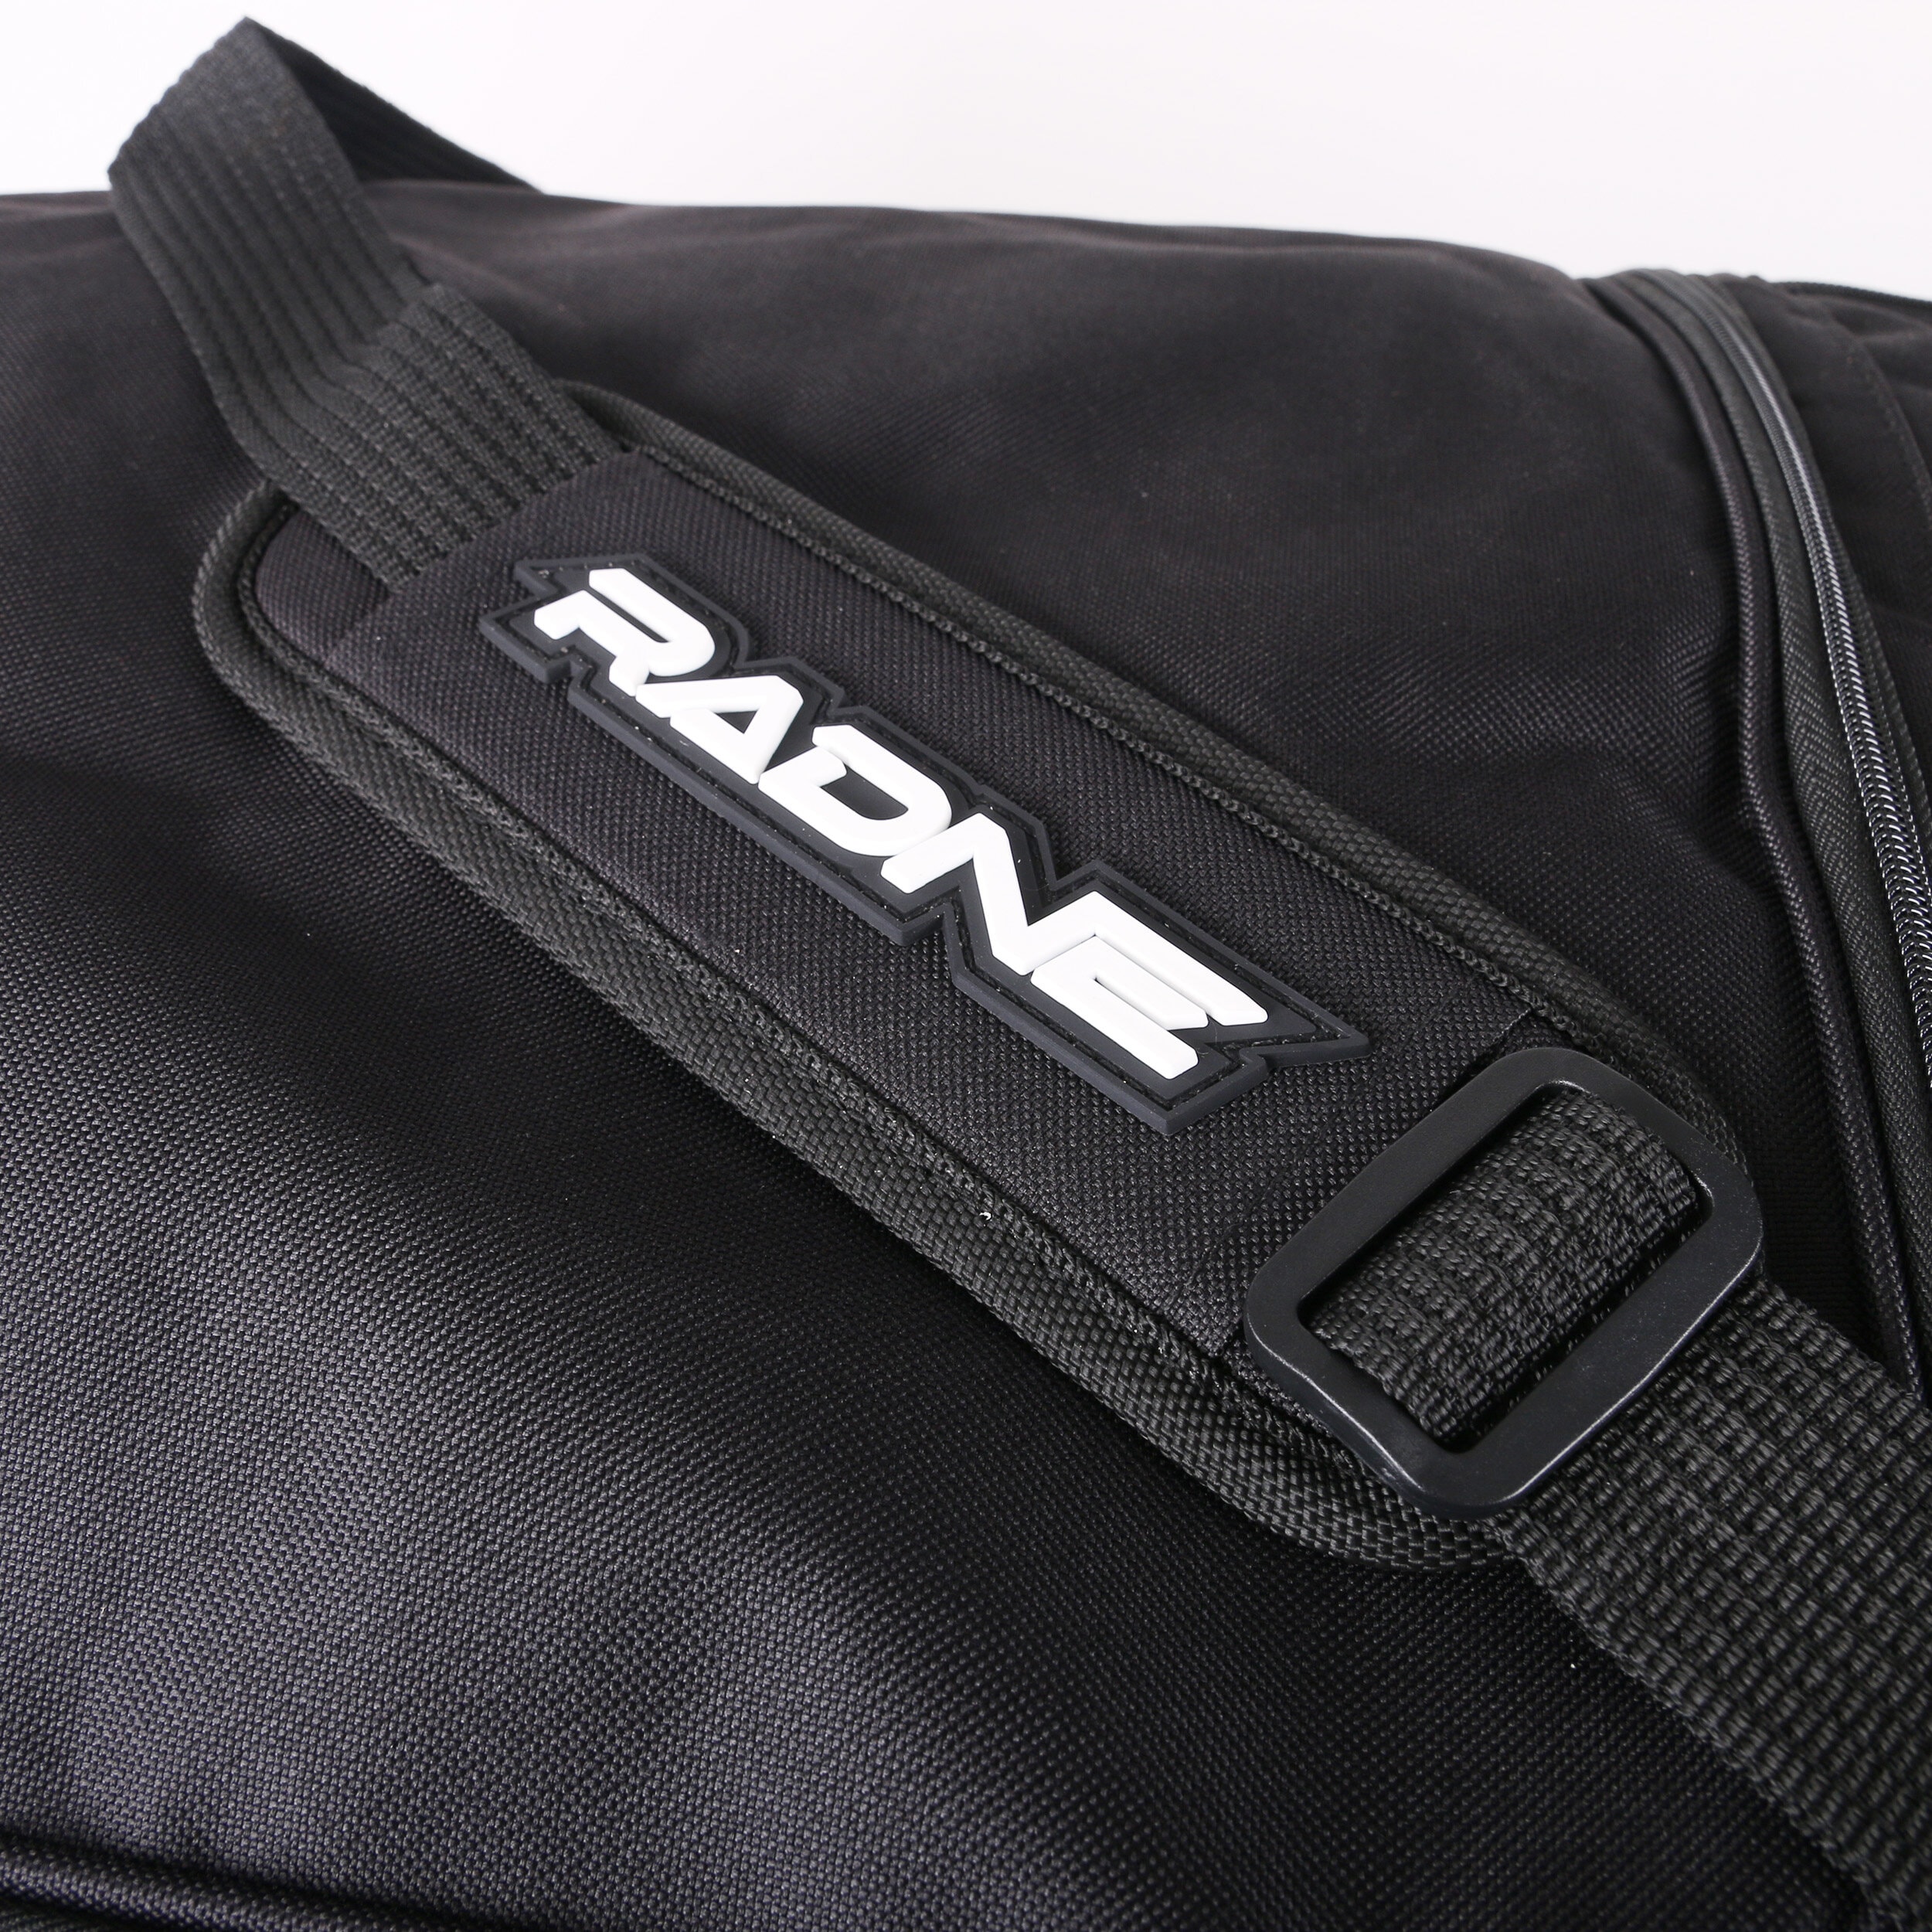 Radne Racing Gear Bag